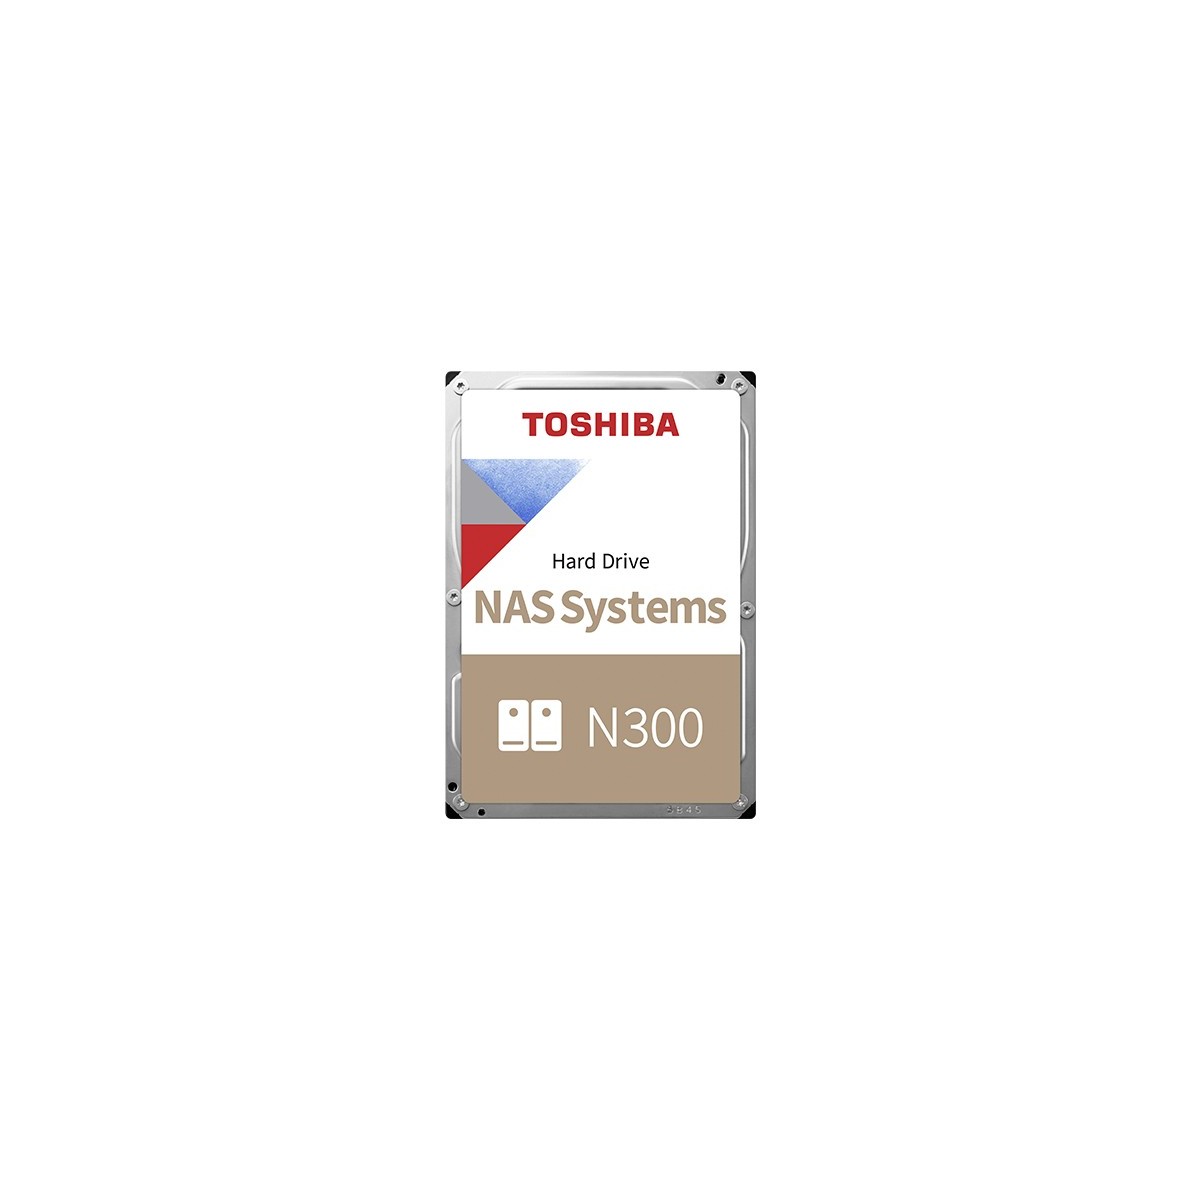 Toshiba N300 High-Rel. Hard Drive 3.5" 14TB